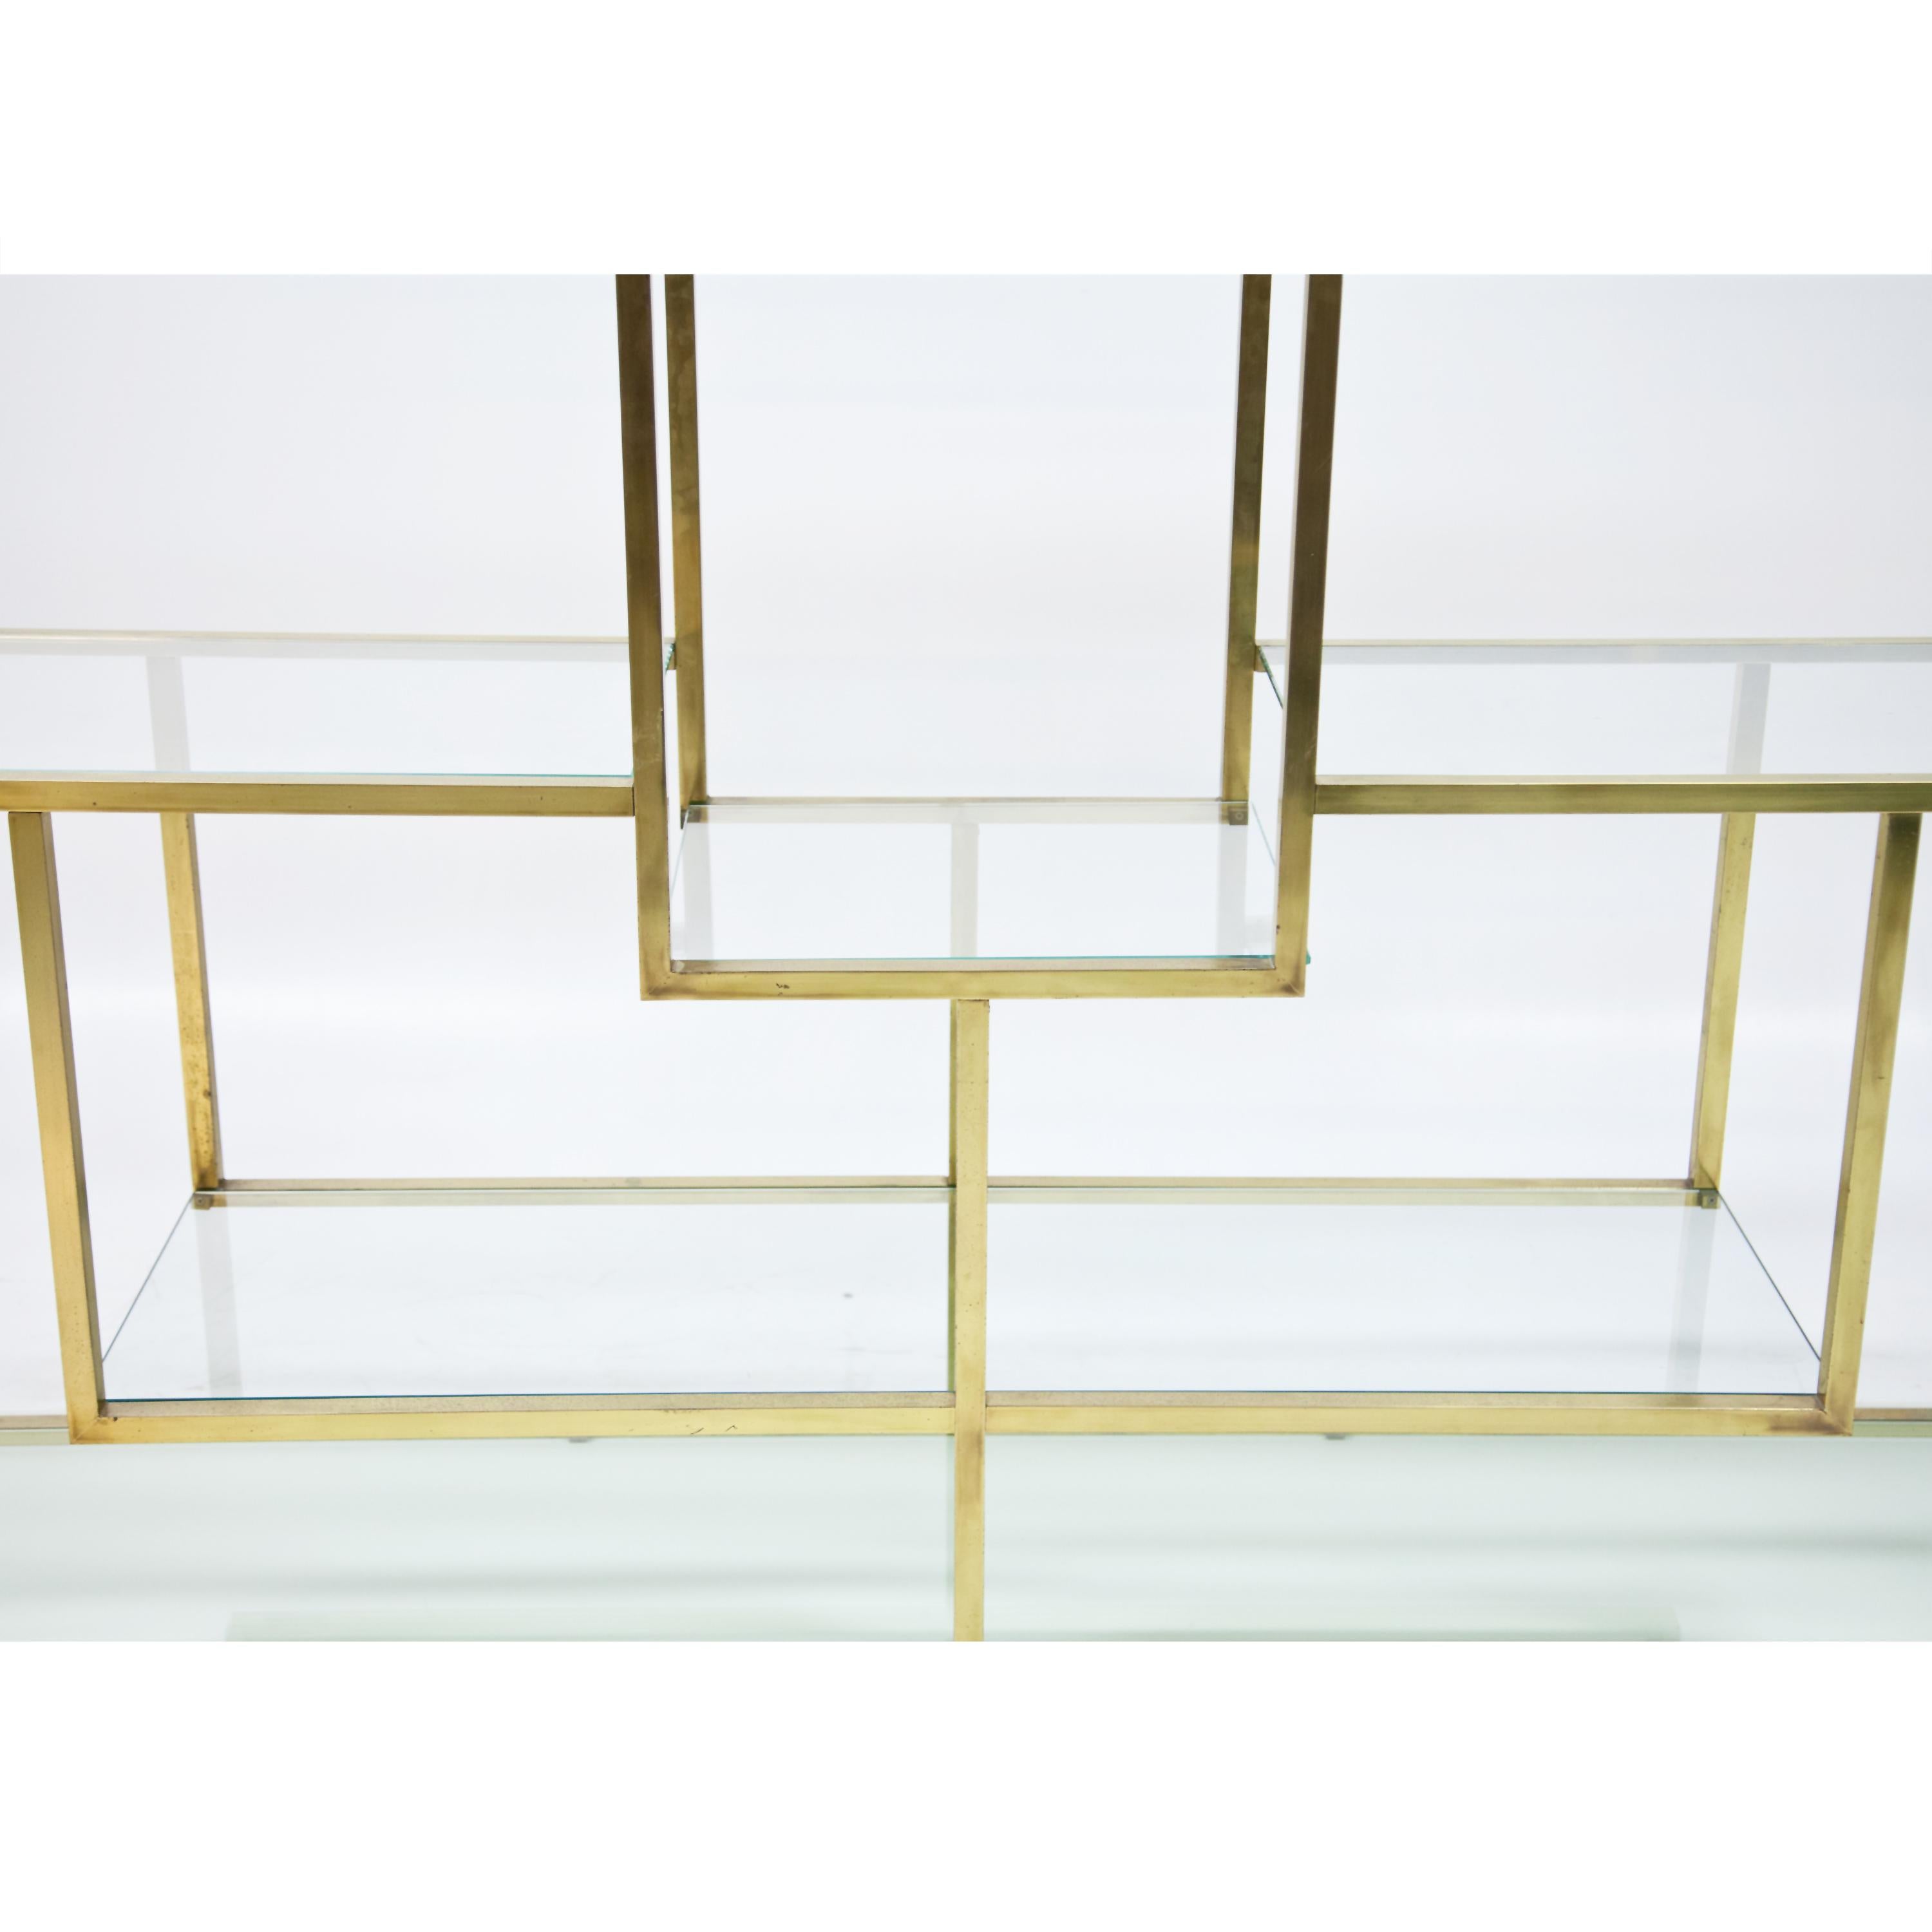 Late 20th Century Geometric Brass Shelf in the Style of Romeo Rega, Italy, 1970s